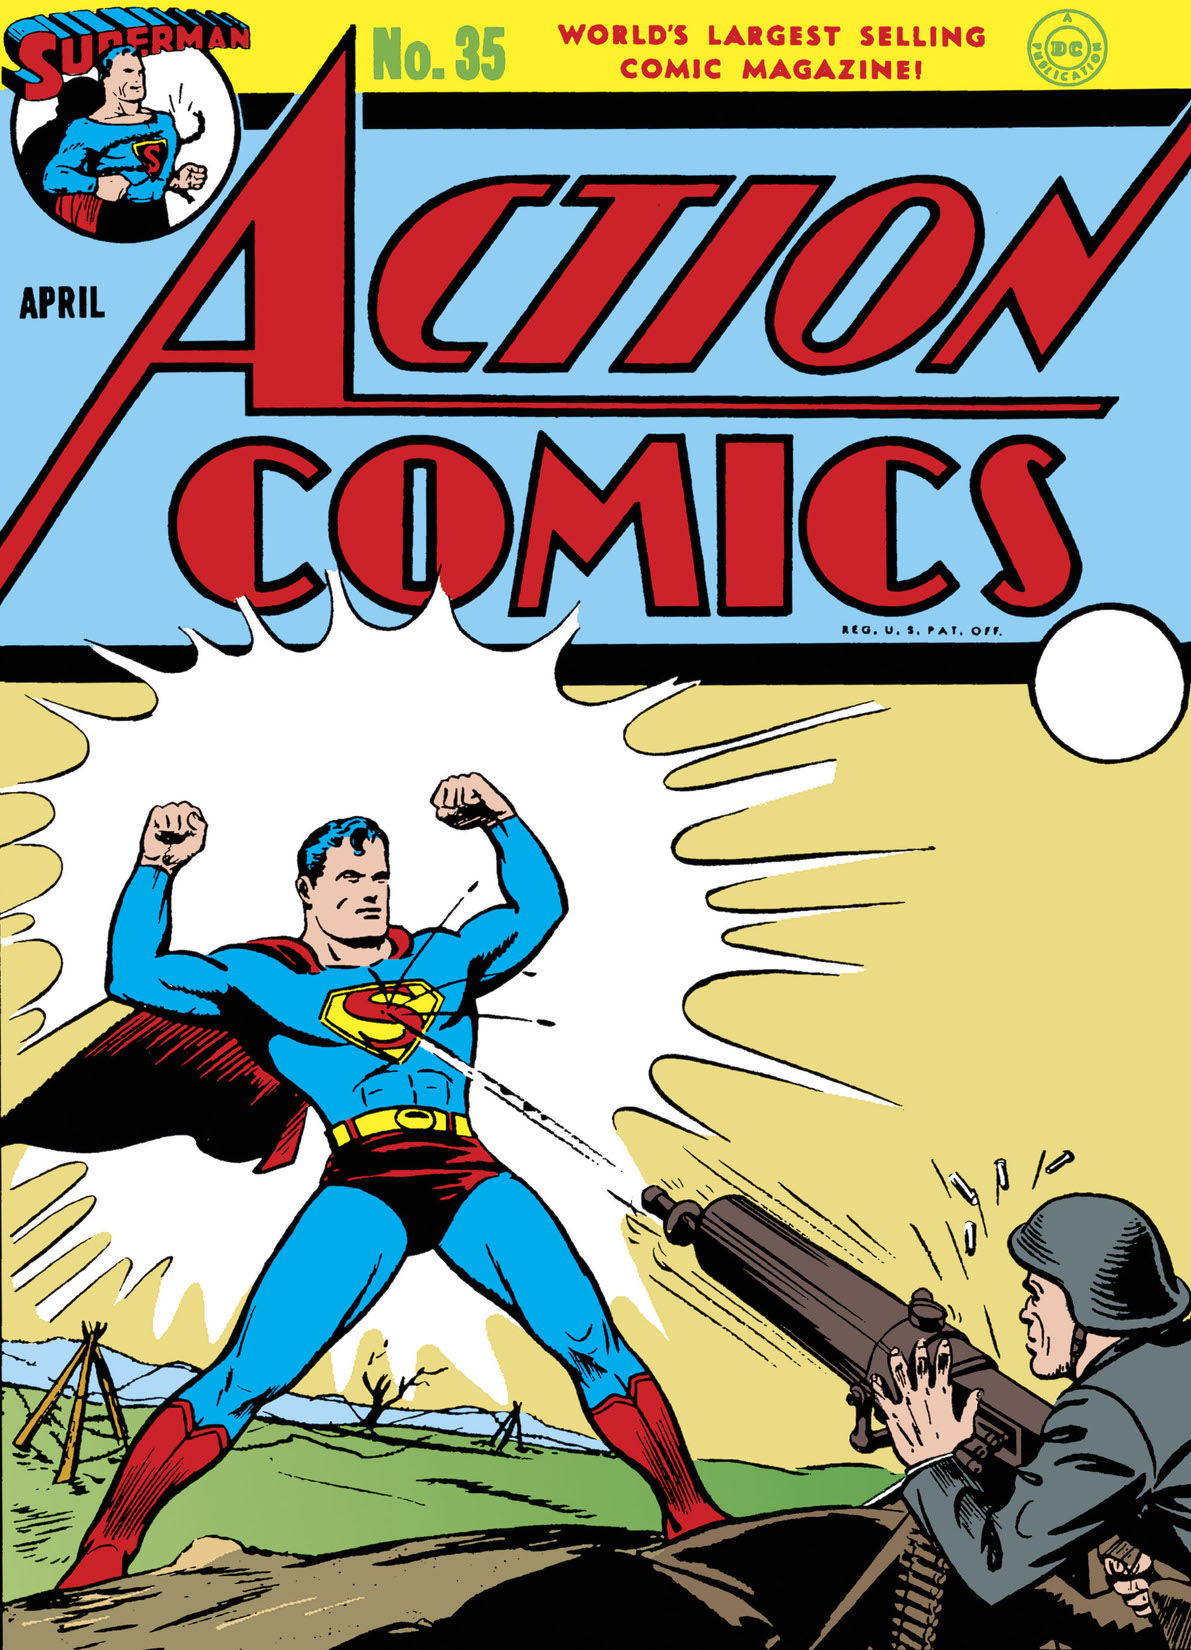 Action Comics (1938-) #35 preview images